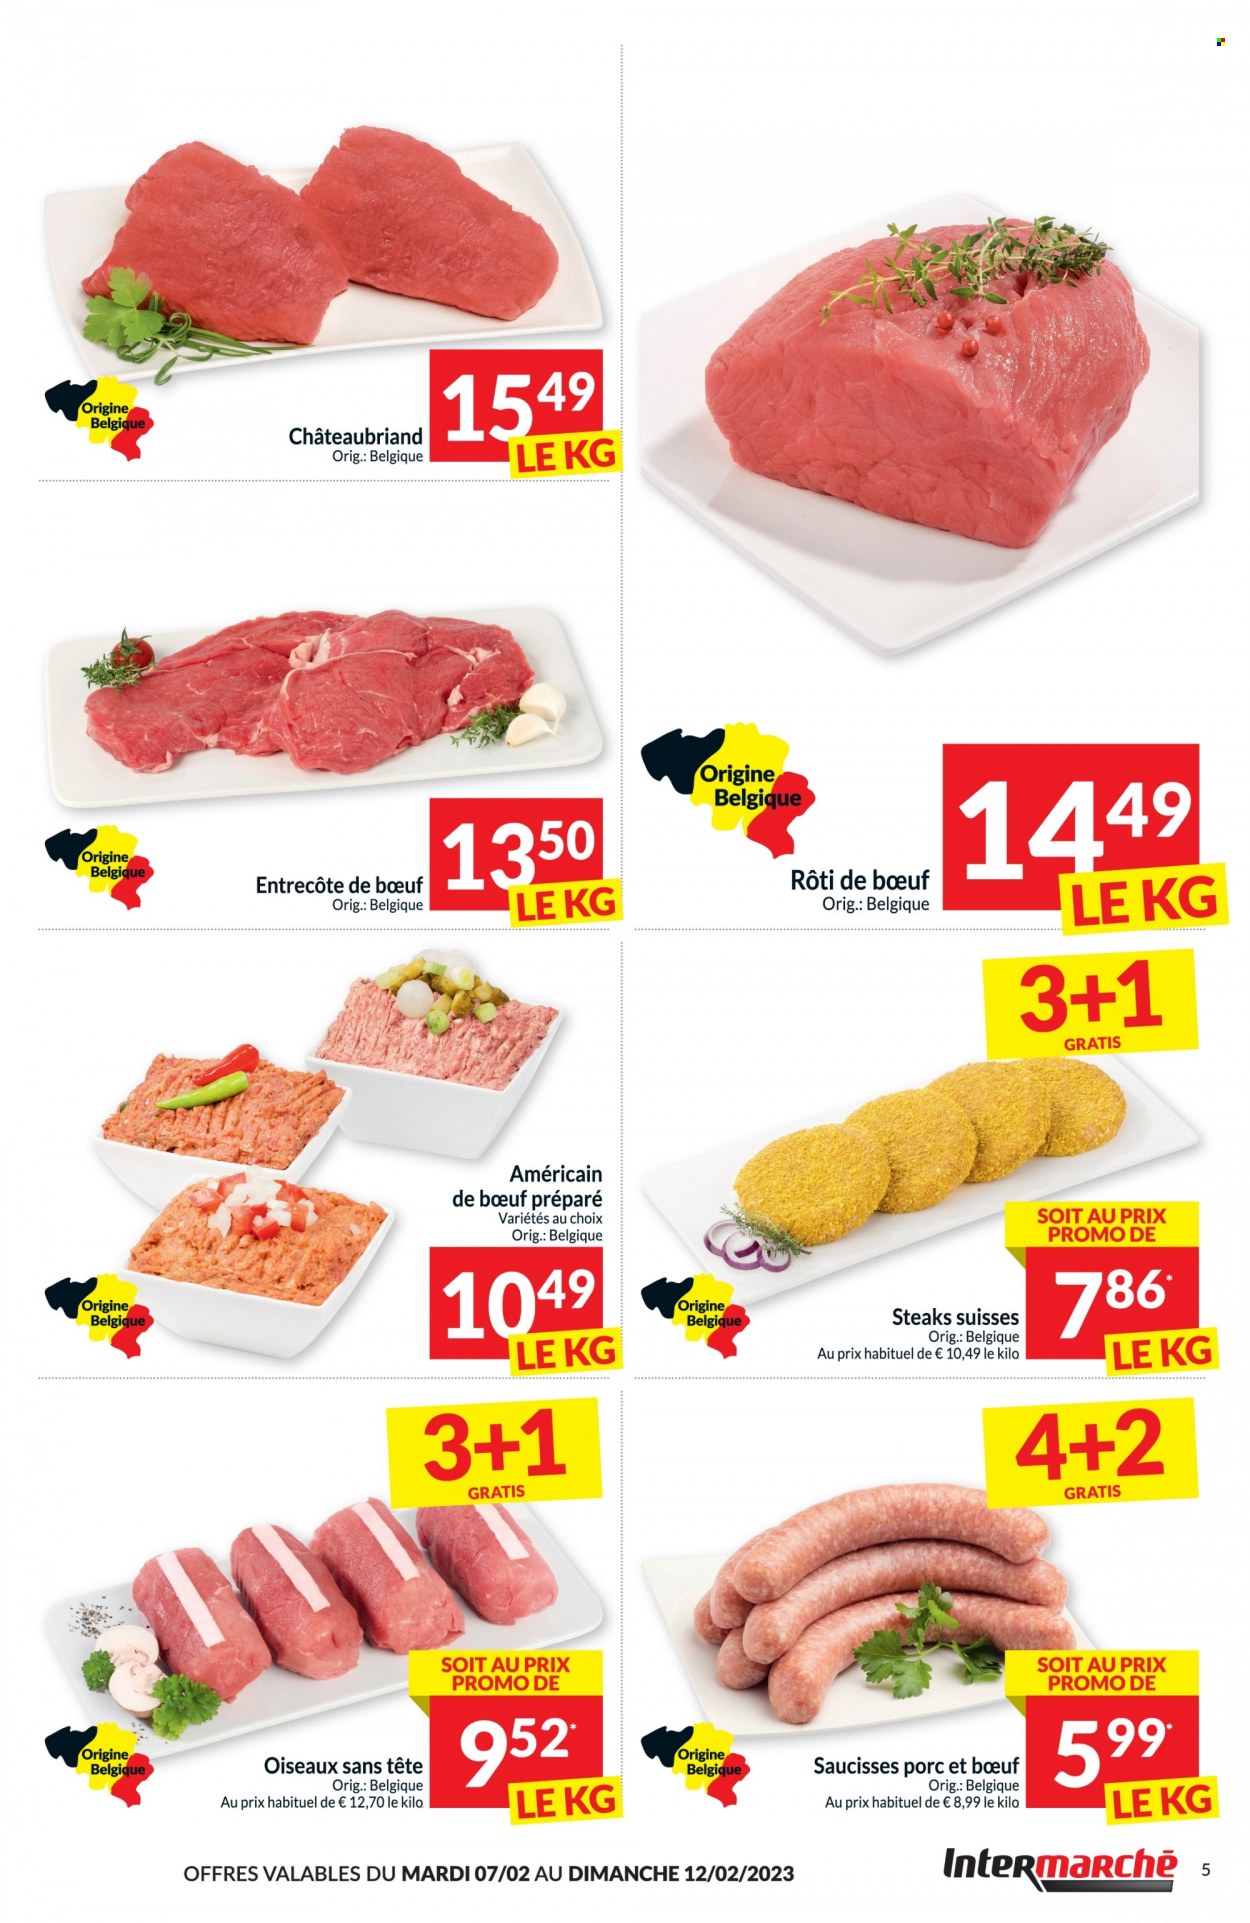 thumbnail - Intermarché-aanbieding - 07/02/2023 - 12/02/2023 -  producten in de aanbieding - steak, entrecote, rundvlees. Pagina 5.